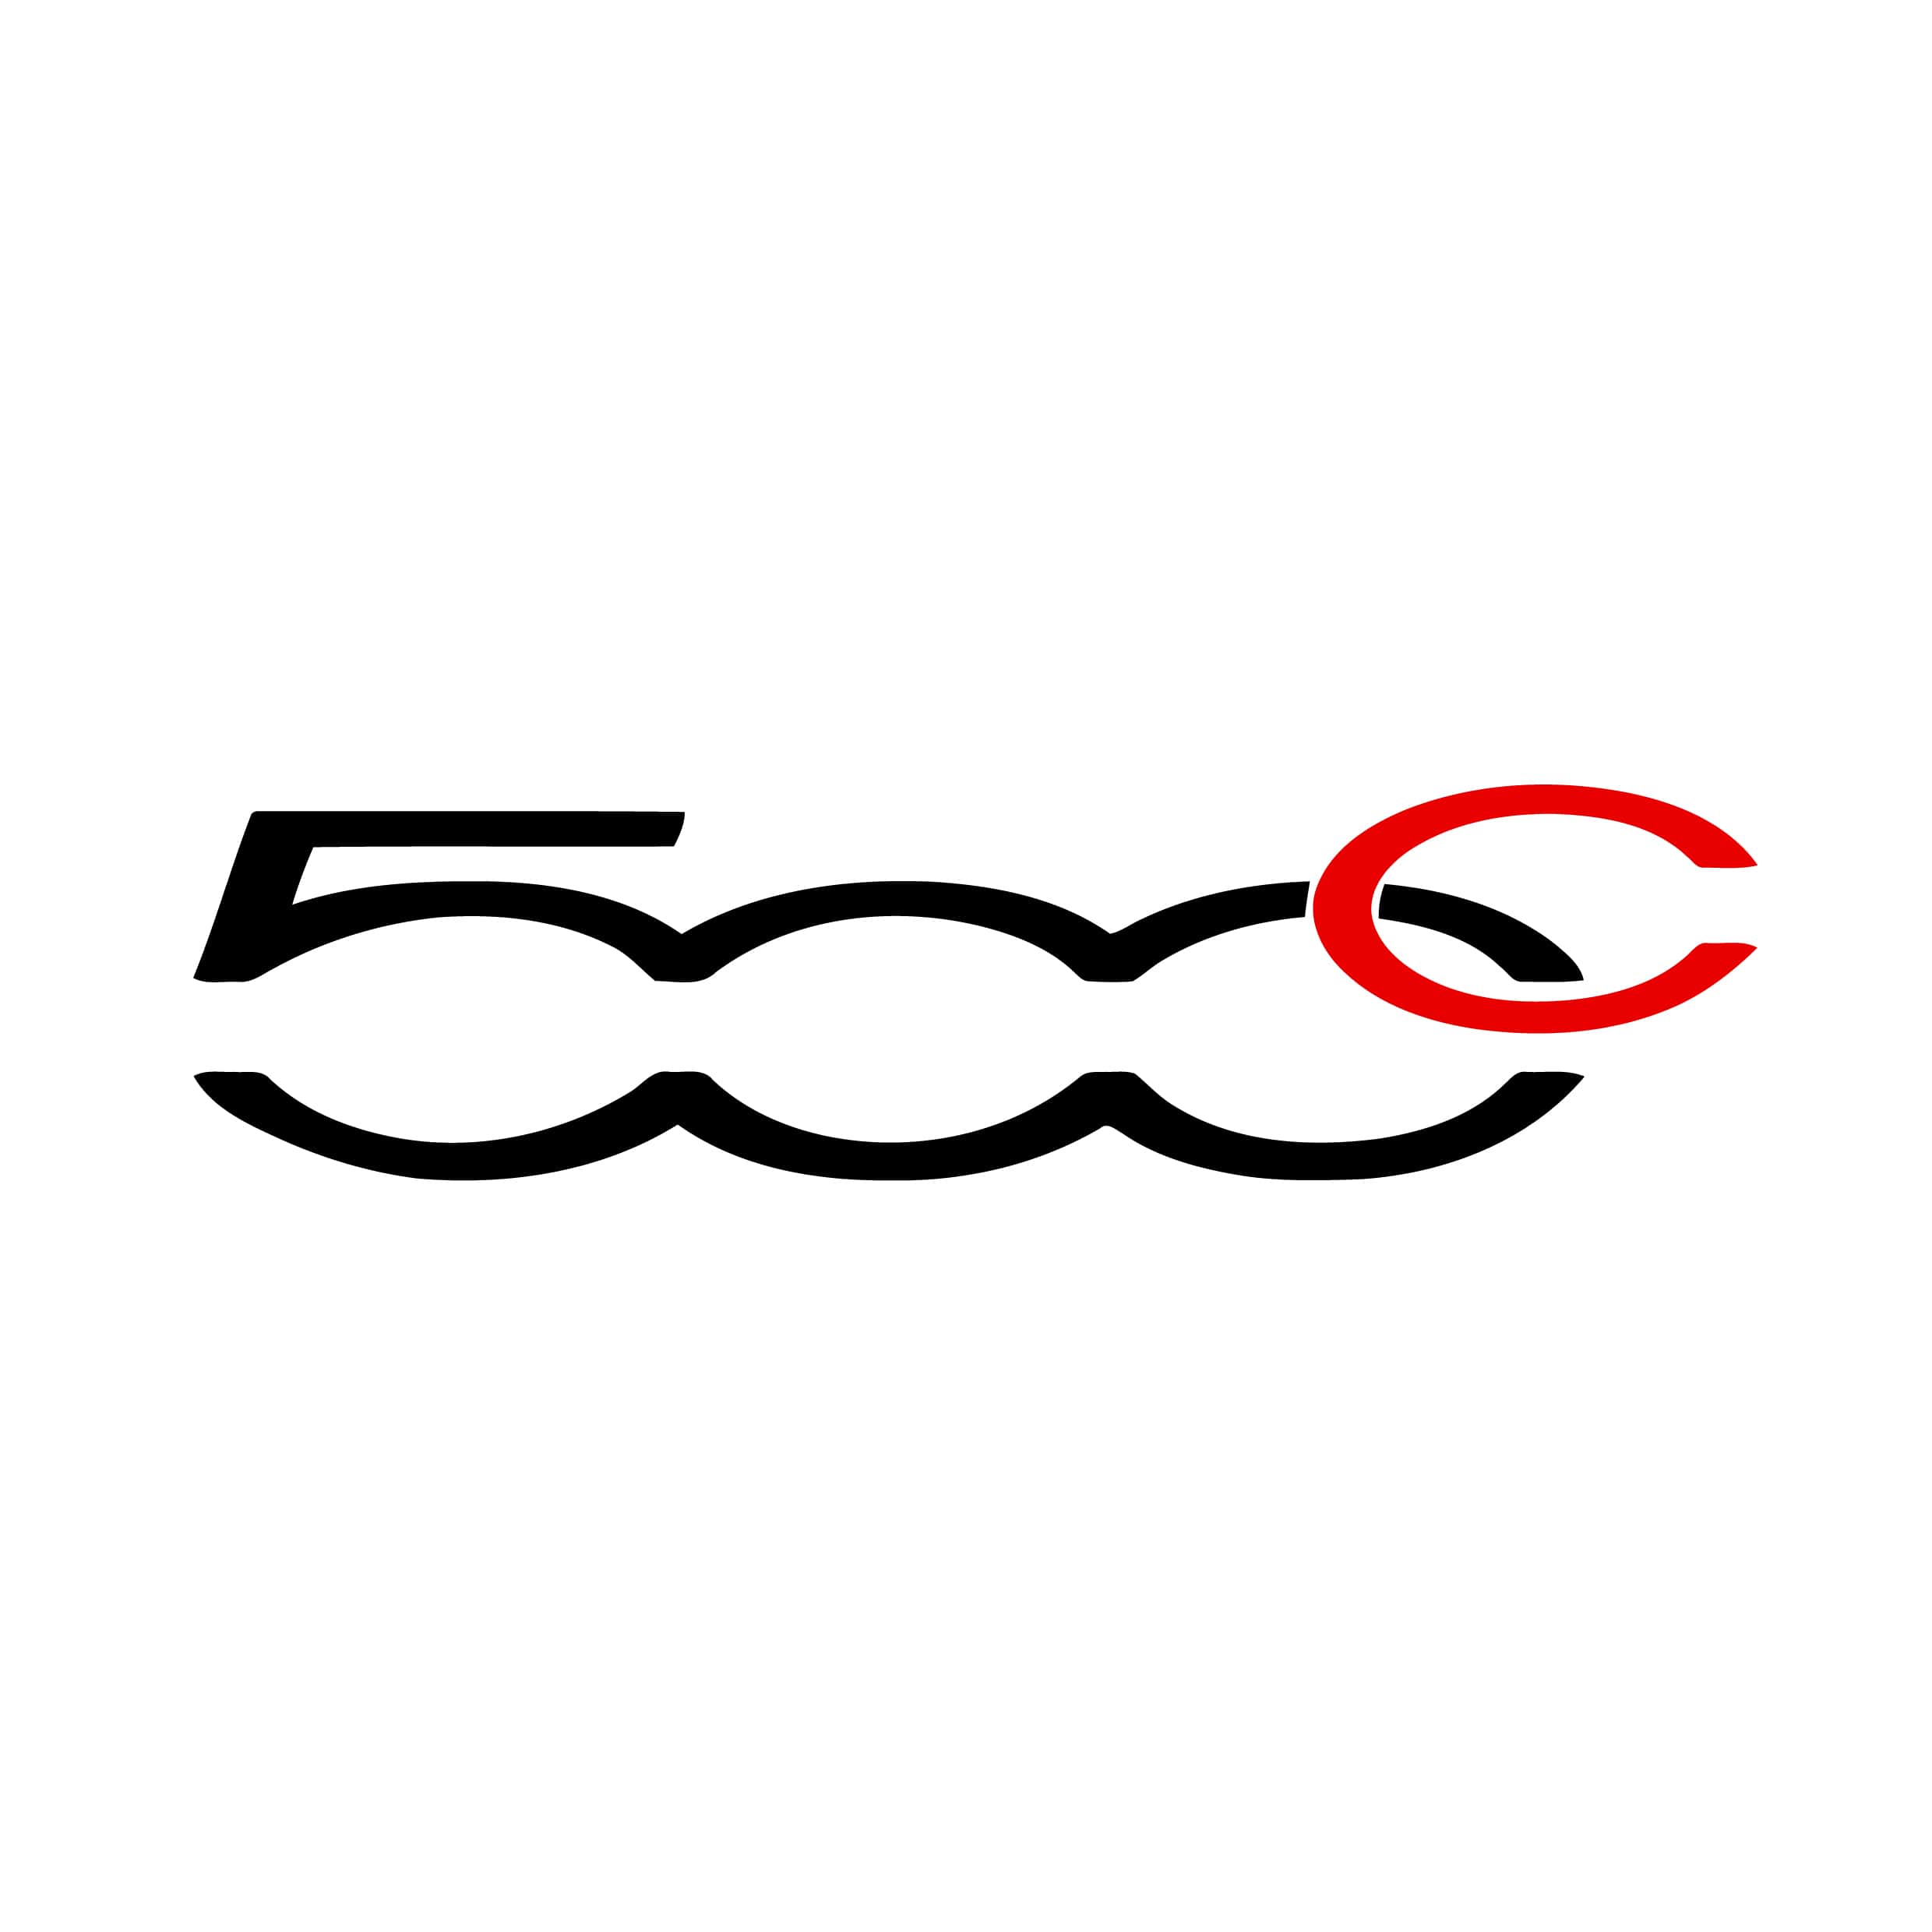 stickers-fiat-500c-ref8-autocollant-voiture-sticker-auto-autocollants-decals-sponsors-racing-tuning-sport-logo-min